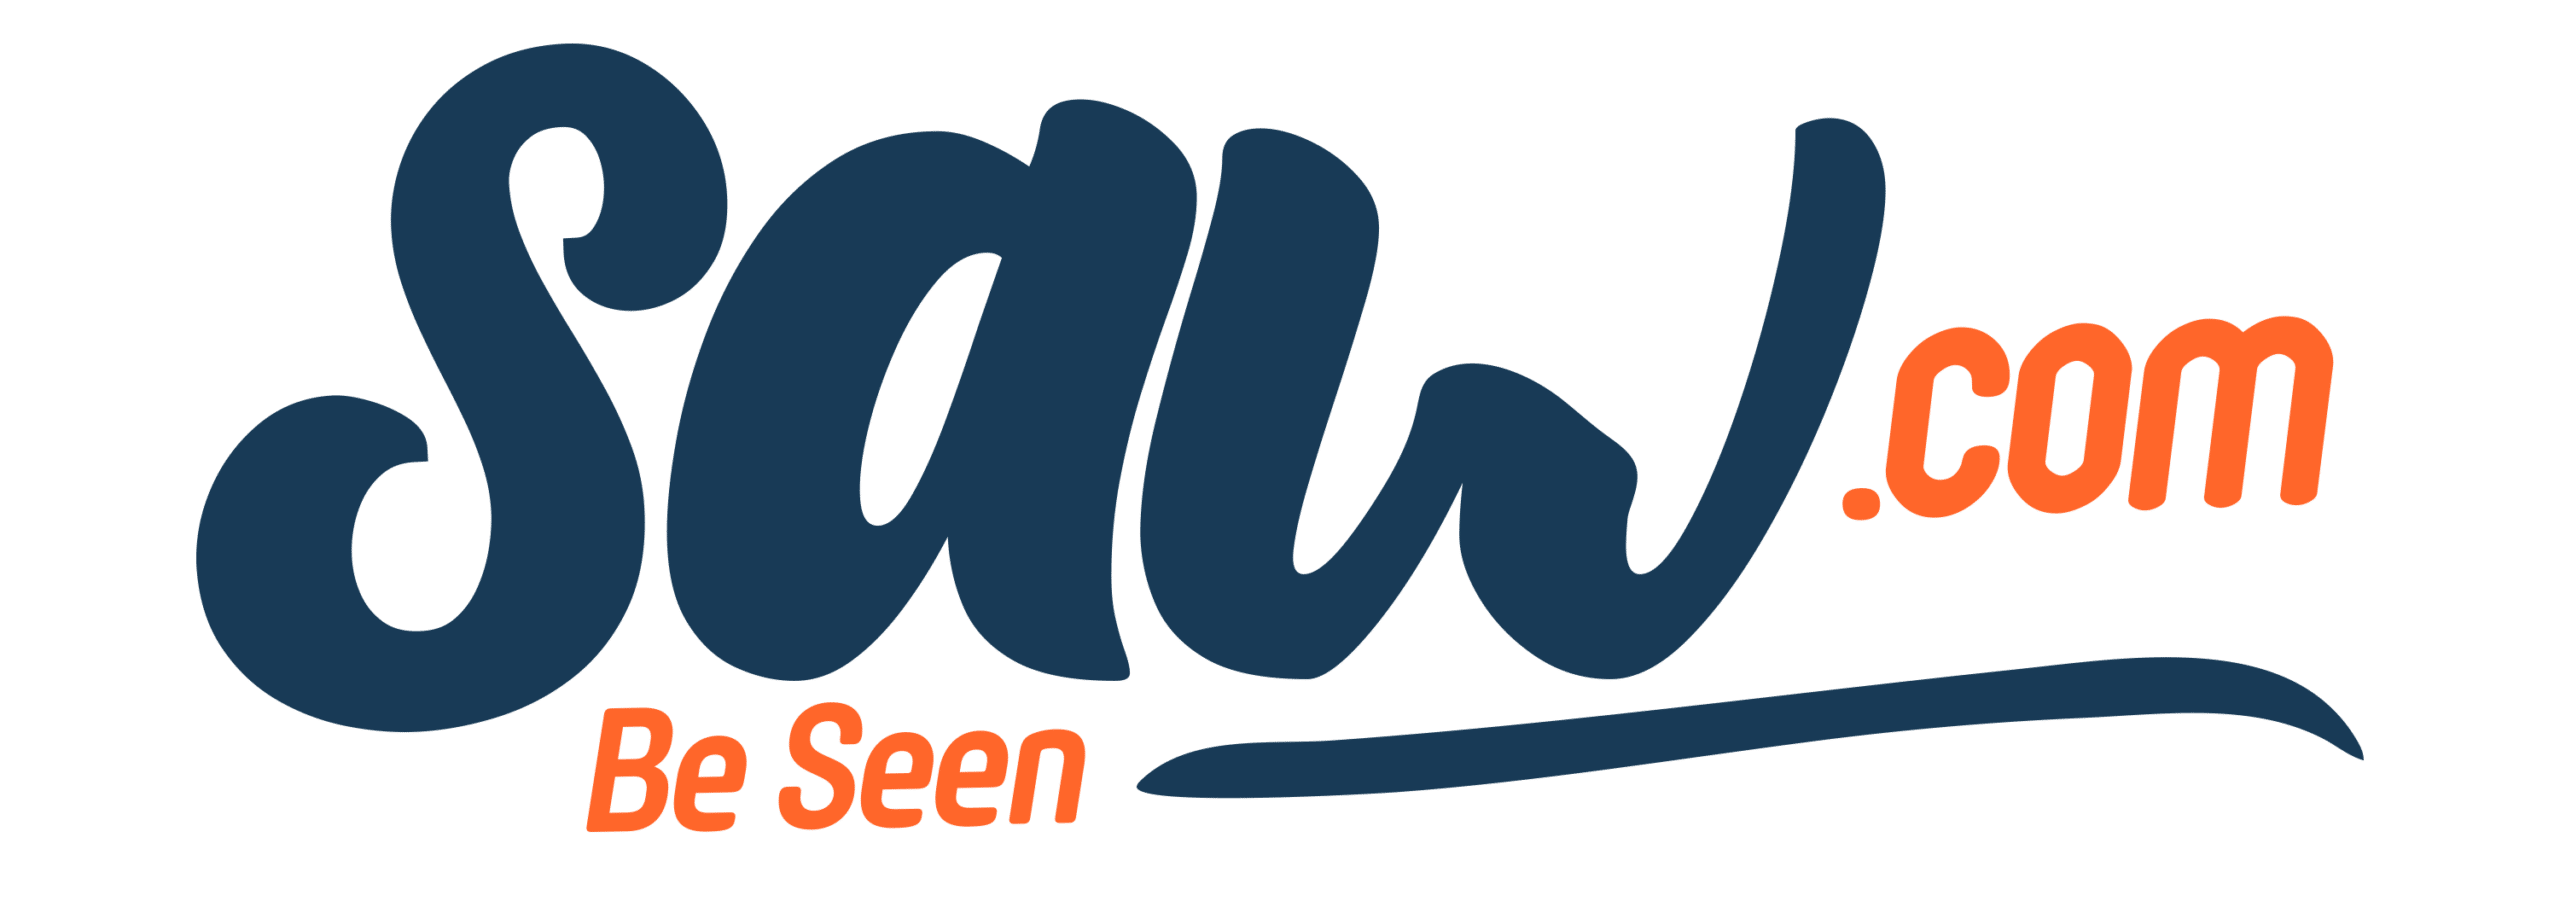 saw.com logo with the slogan 